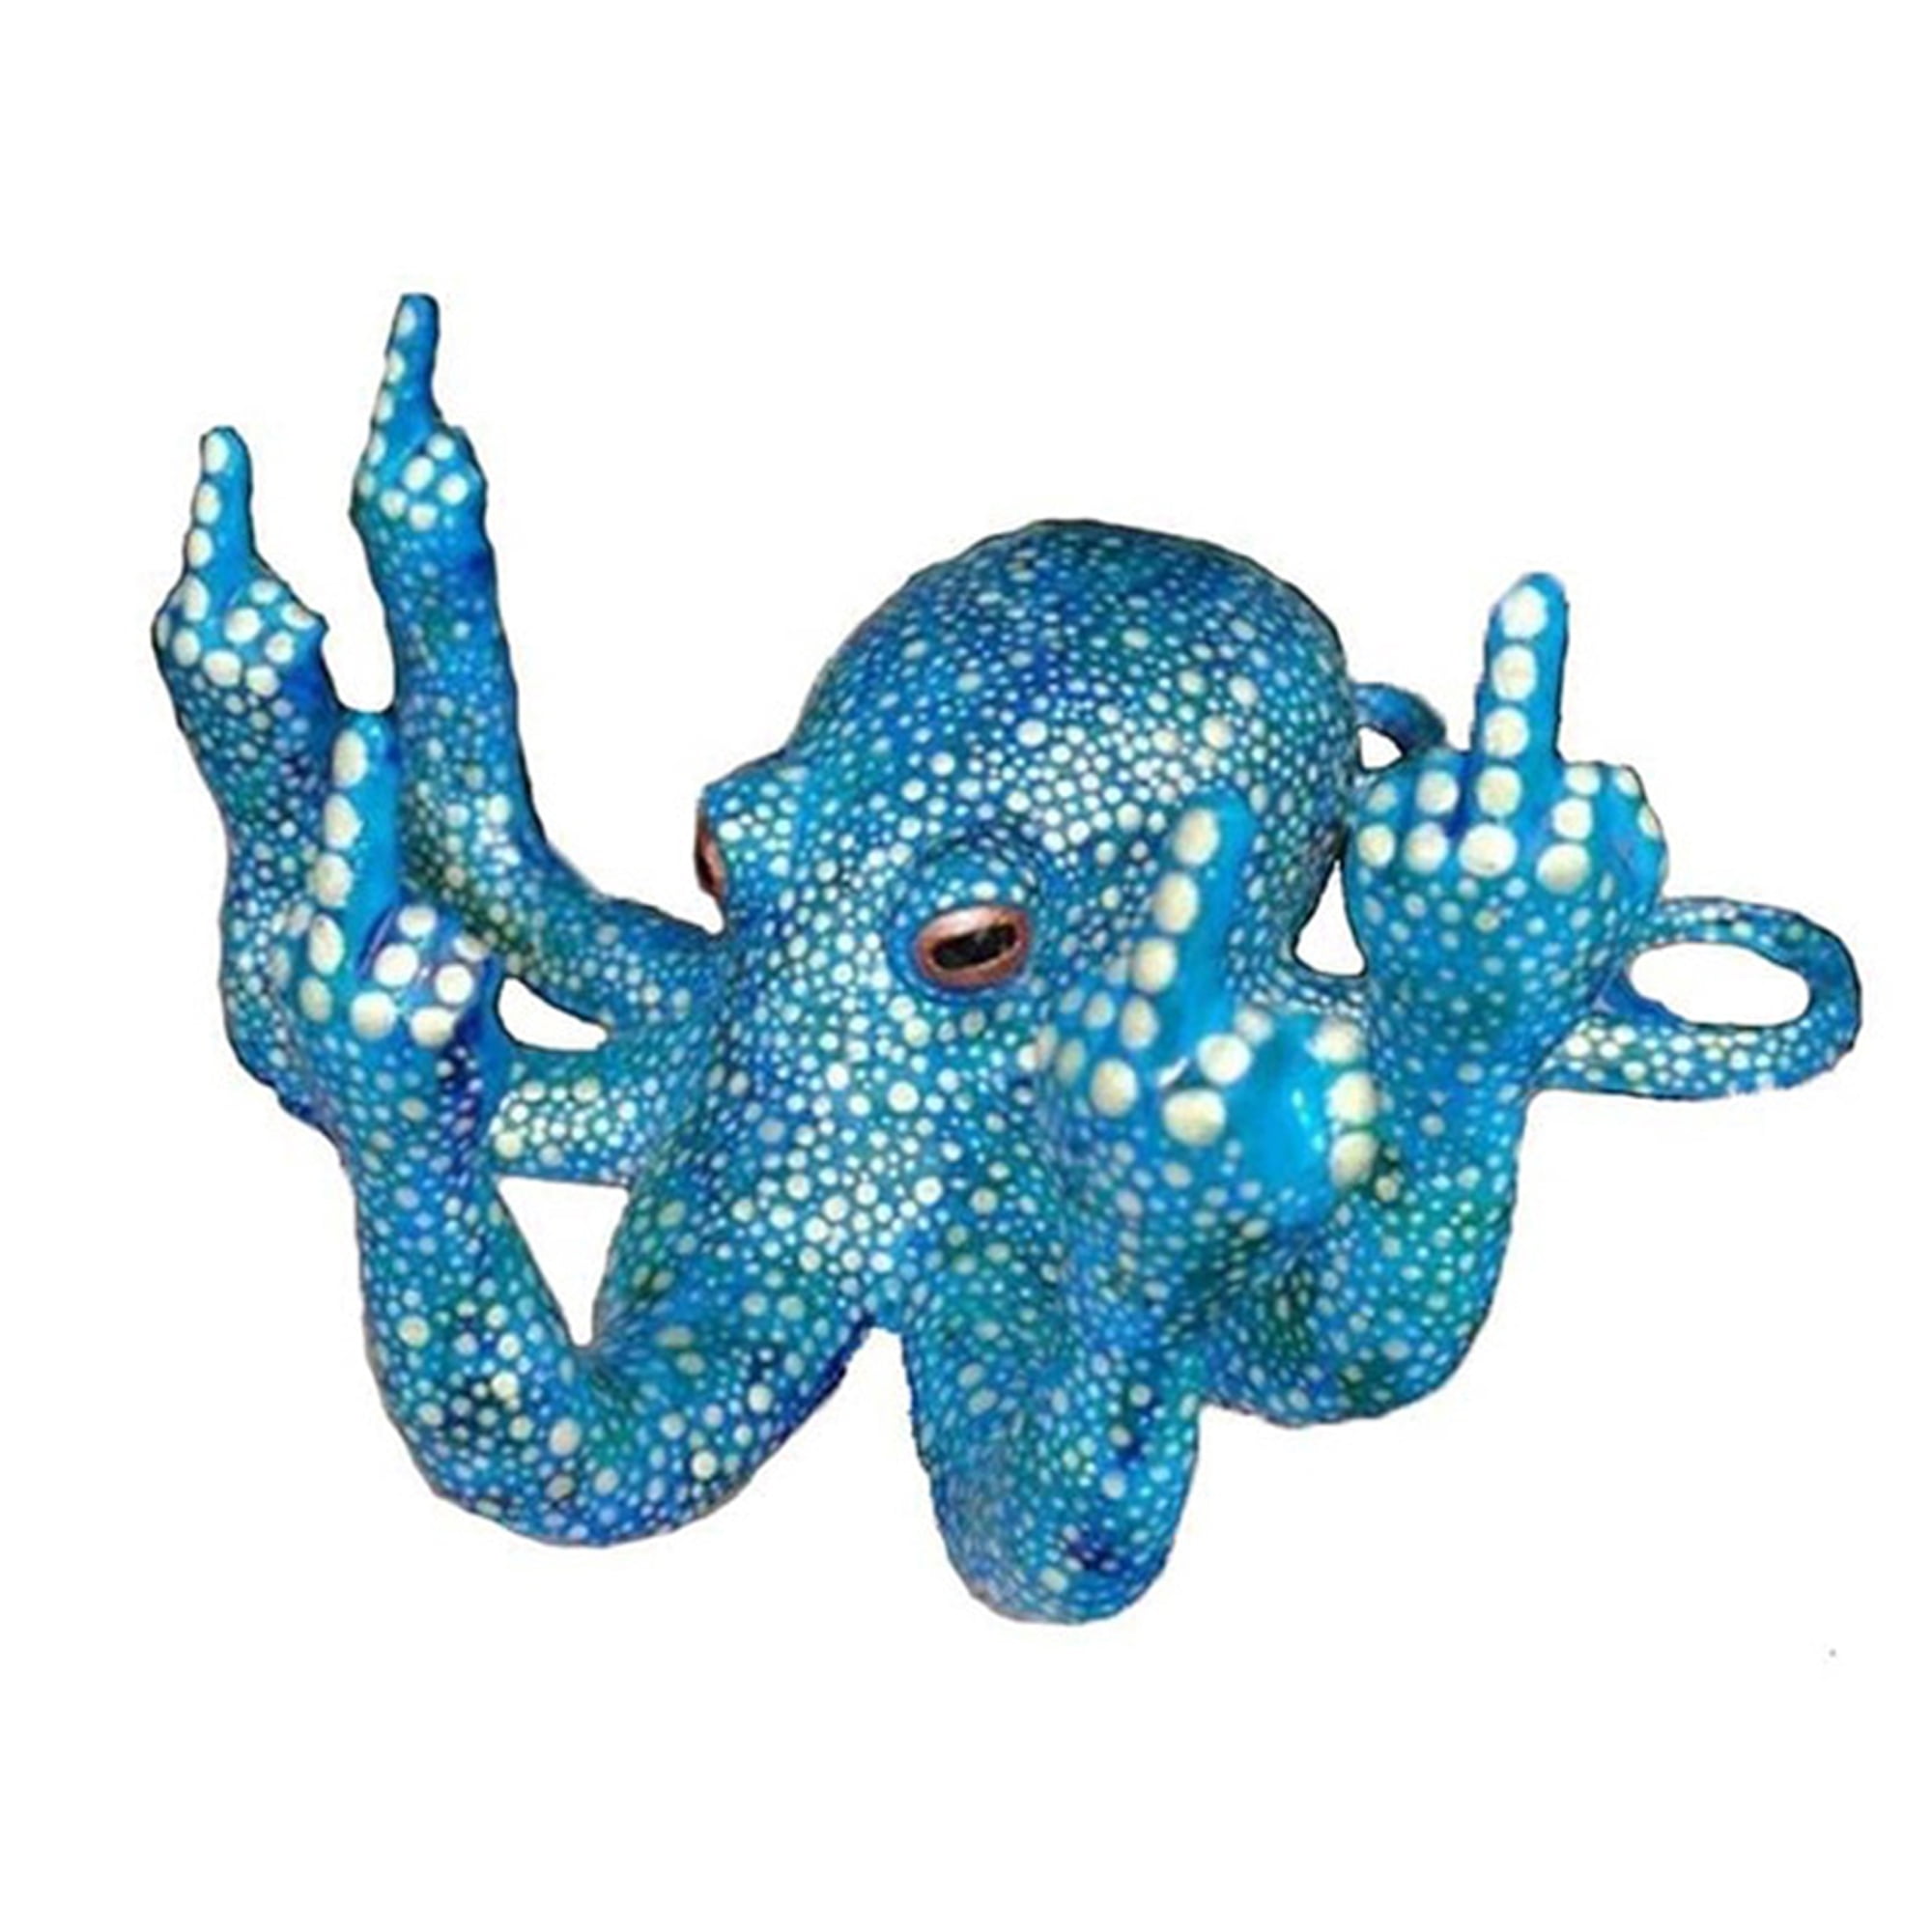 Ocean Animal Octopus Statues Figurine Home Decor Bookends 